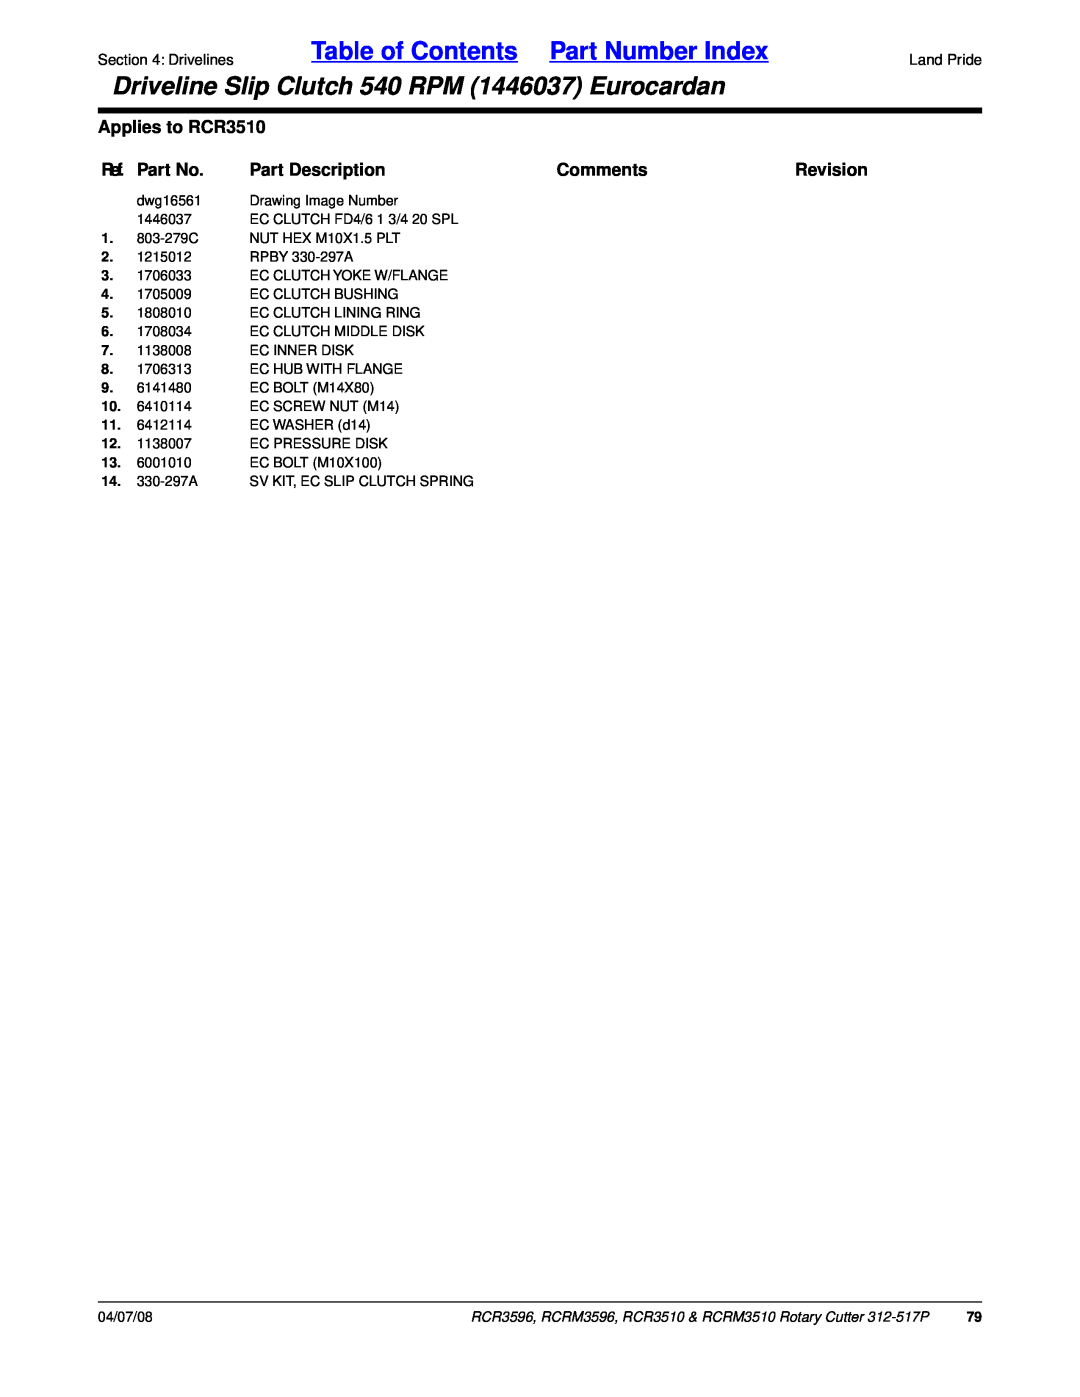 Land Pride RCR3596 Table of Contents Part Number Index, Driveline Slip Clutch 540 RPM 1446037 Eurocardan, Ref. Part No 